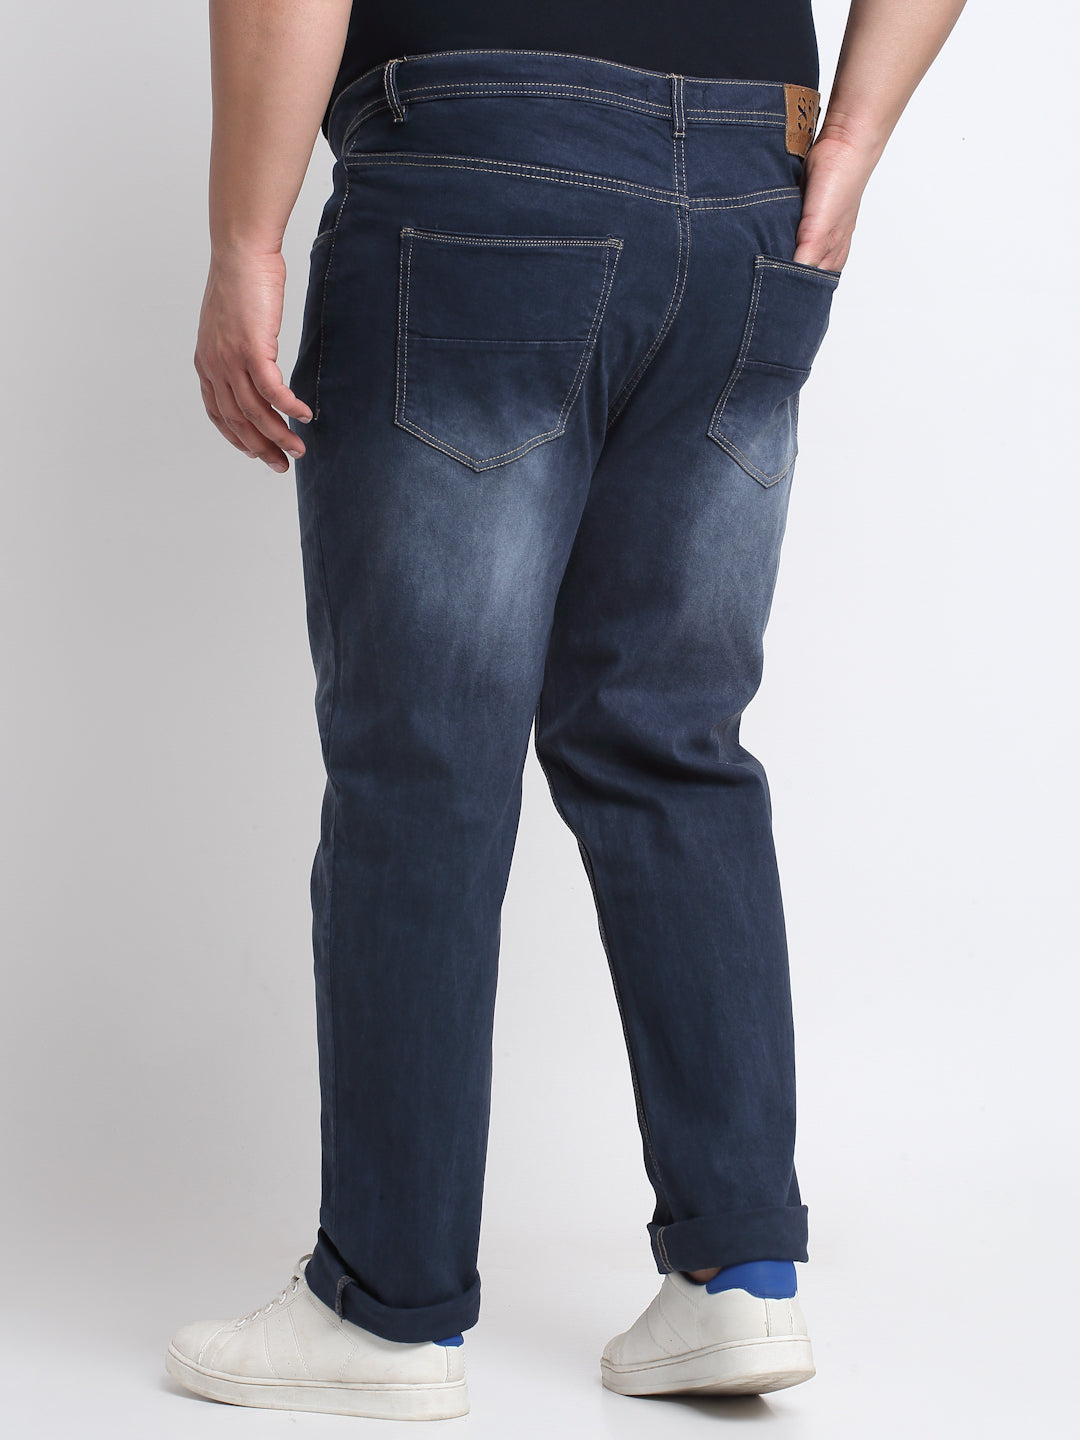 Men's Ripped Jeans Stretch Skinny Washed Blue Boys Slim Denim Pants Jean  Trouser | eBay